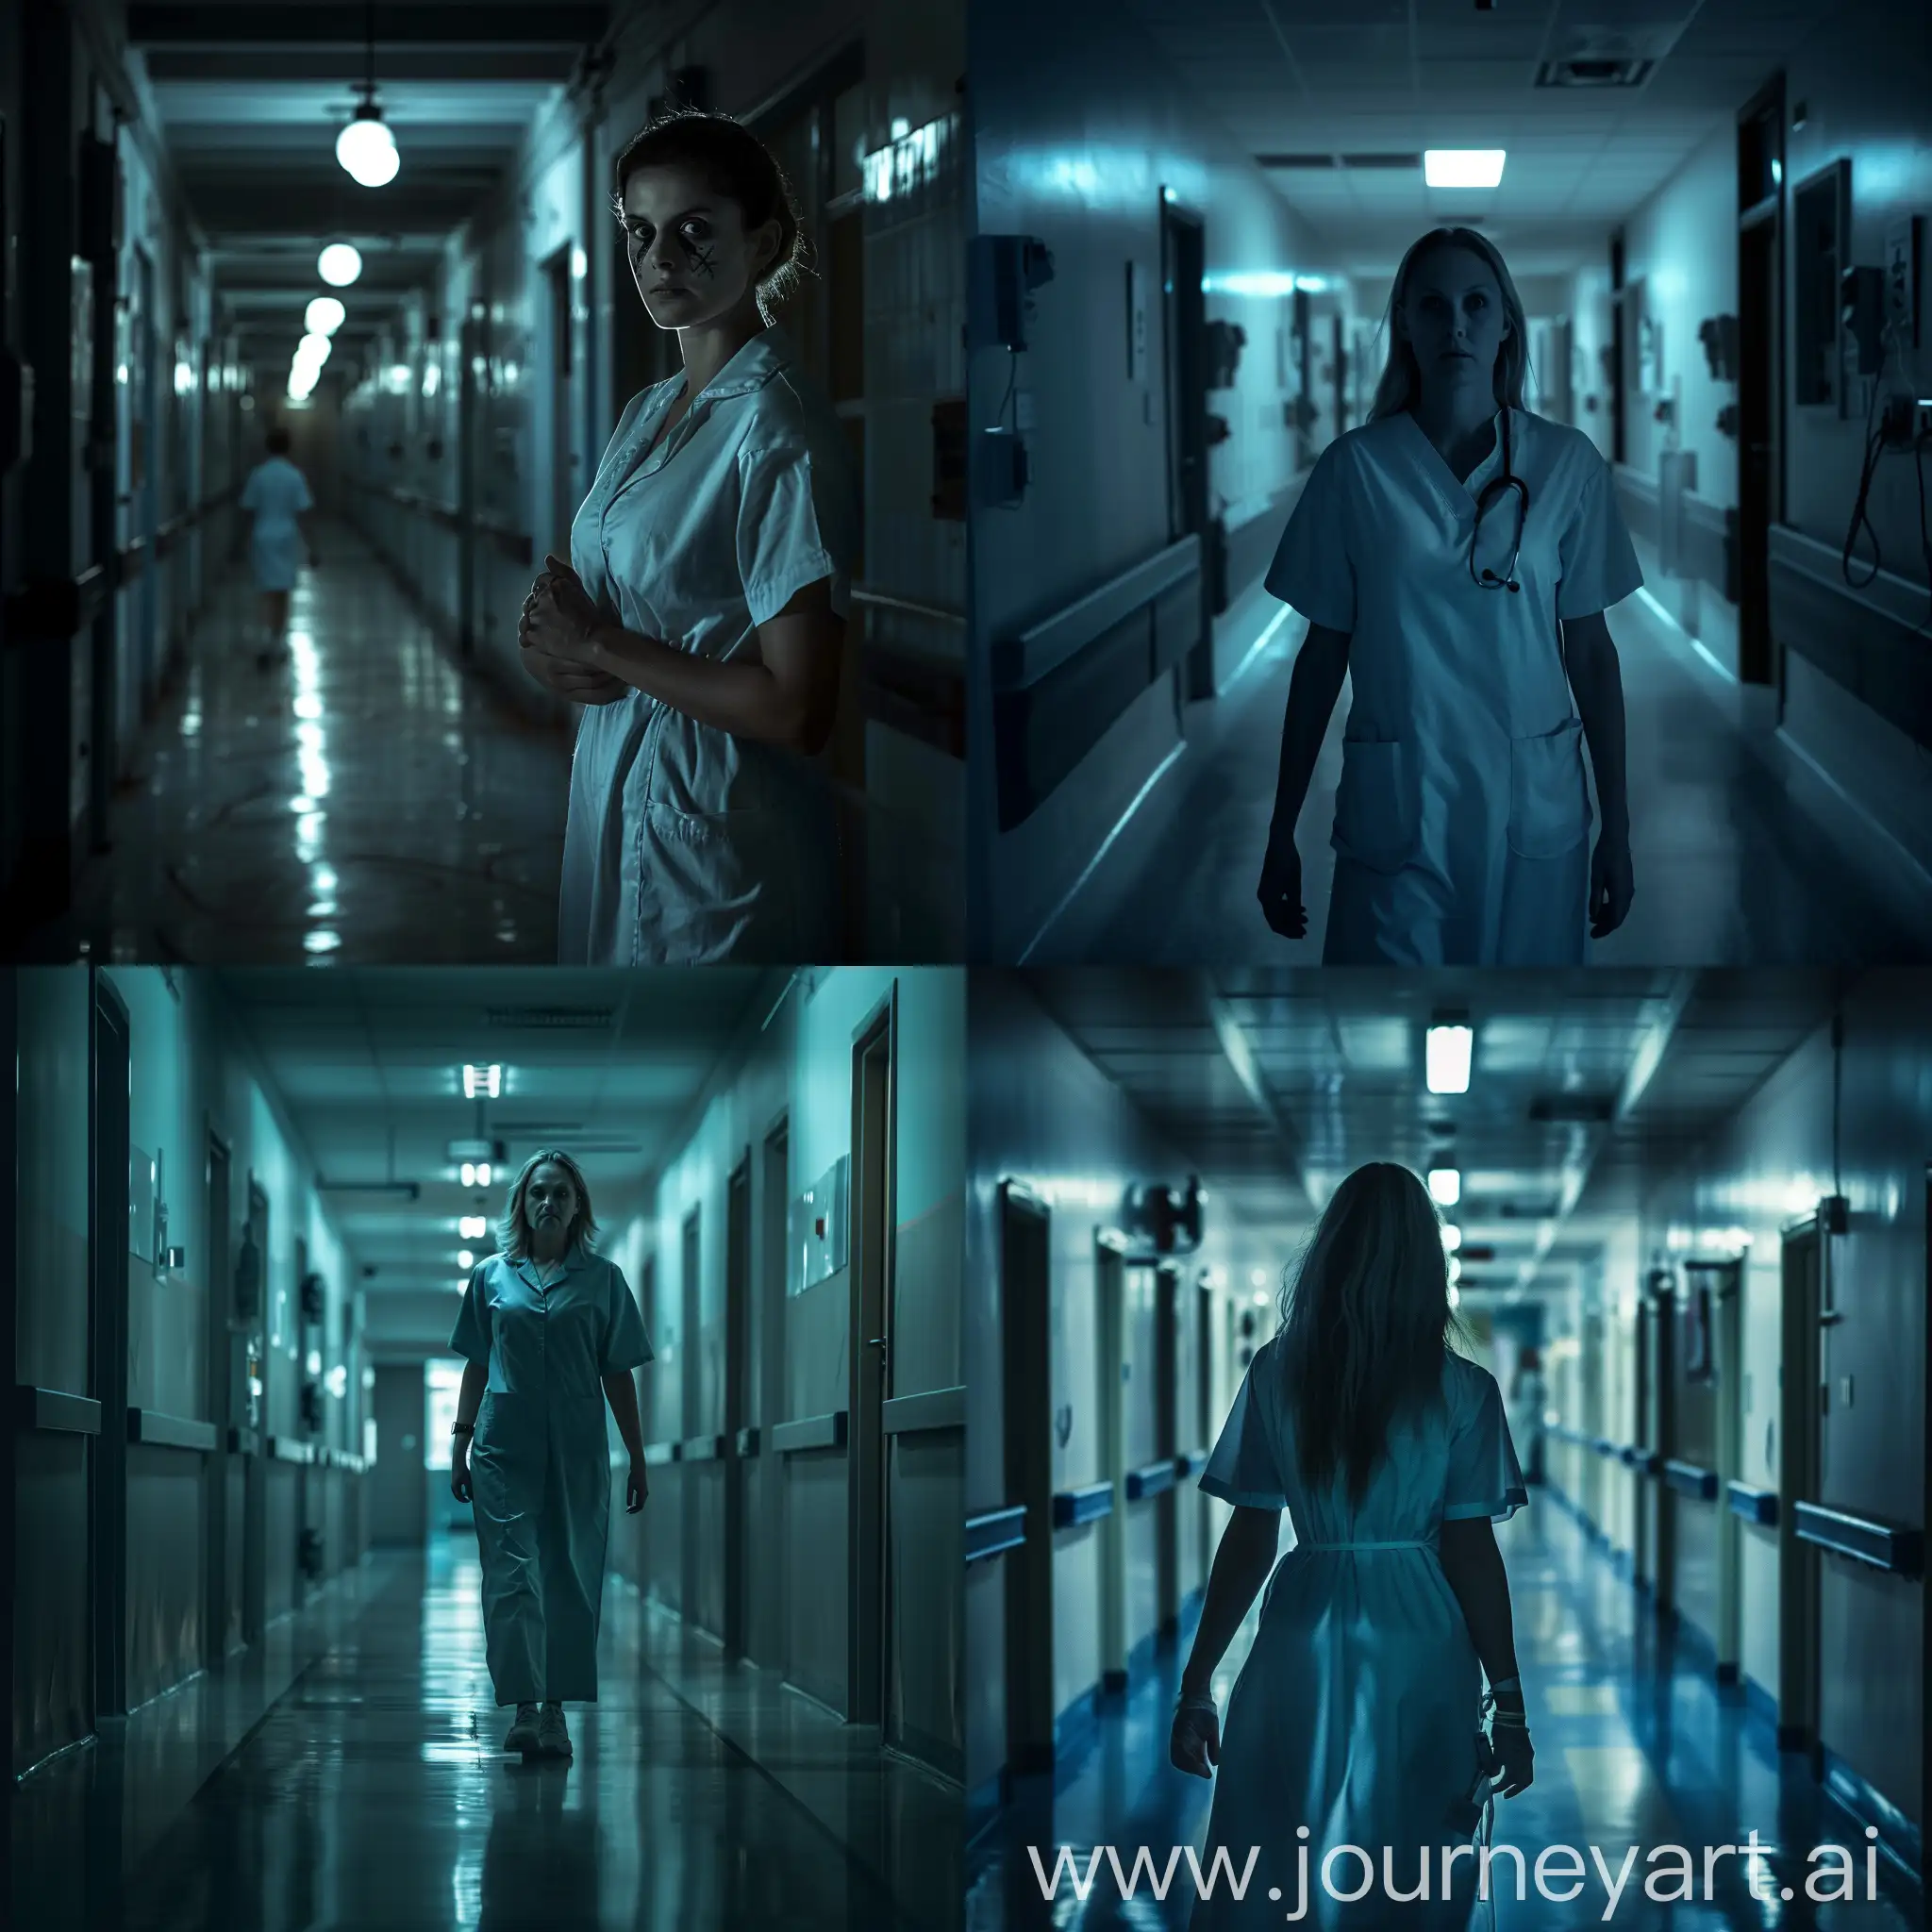 Dark-Hospital-Encounter-Scary-Nurse-in-Haunting-Atmosphere